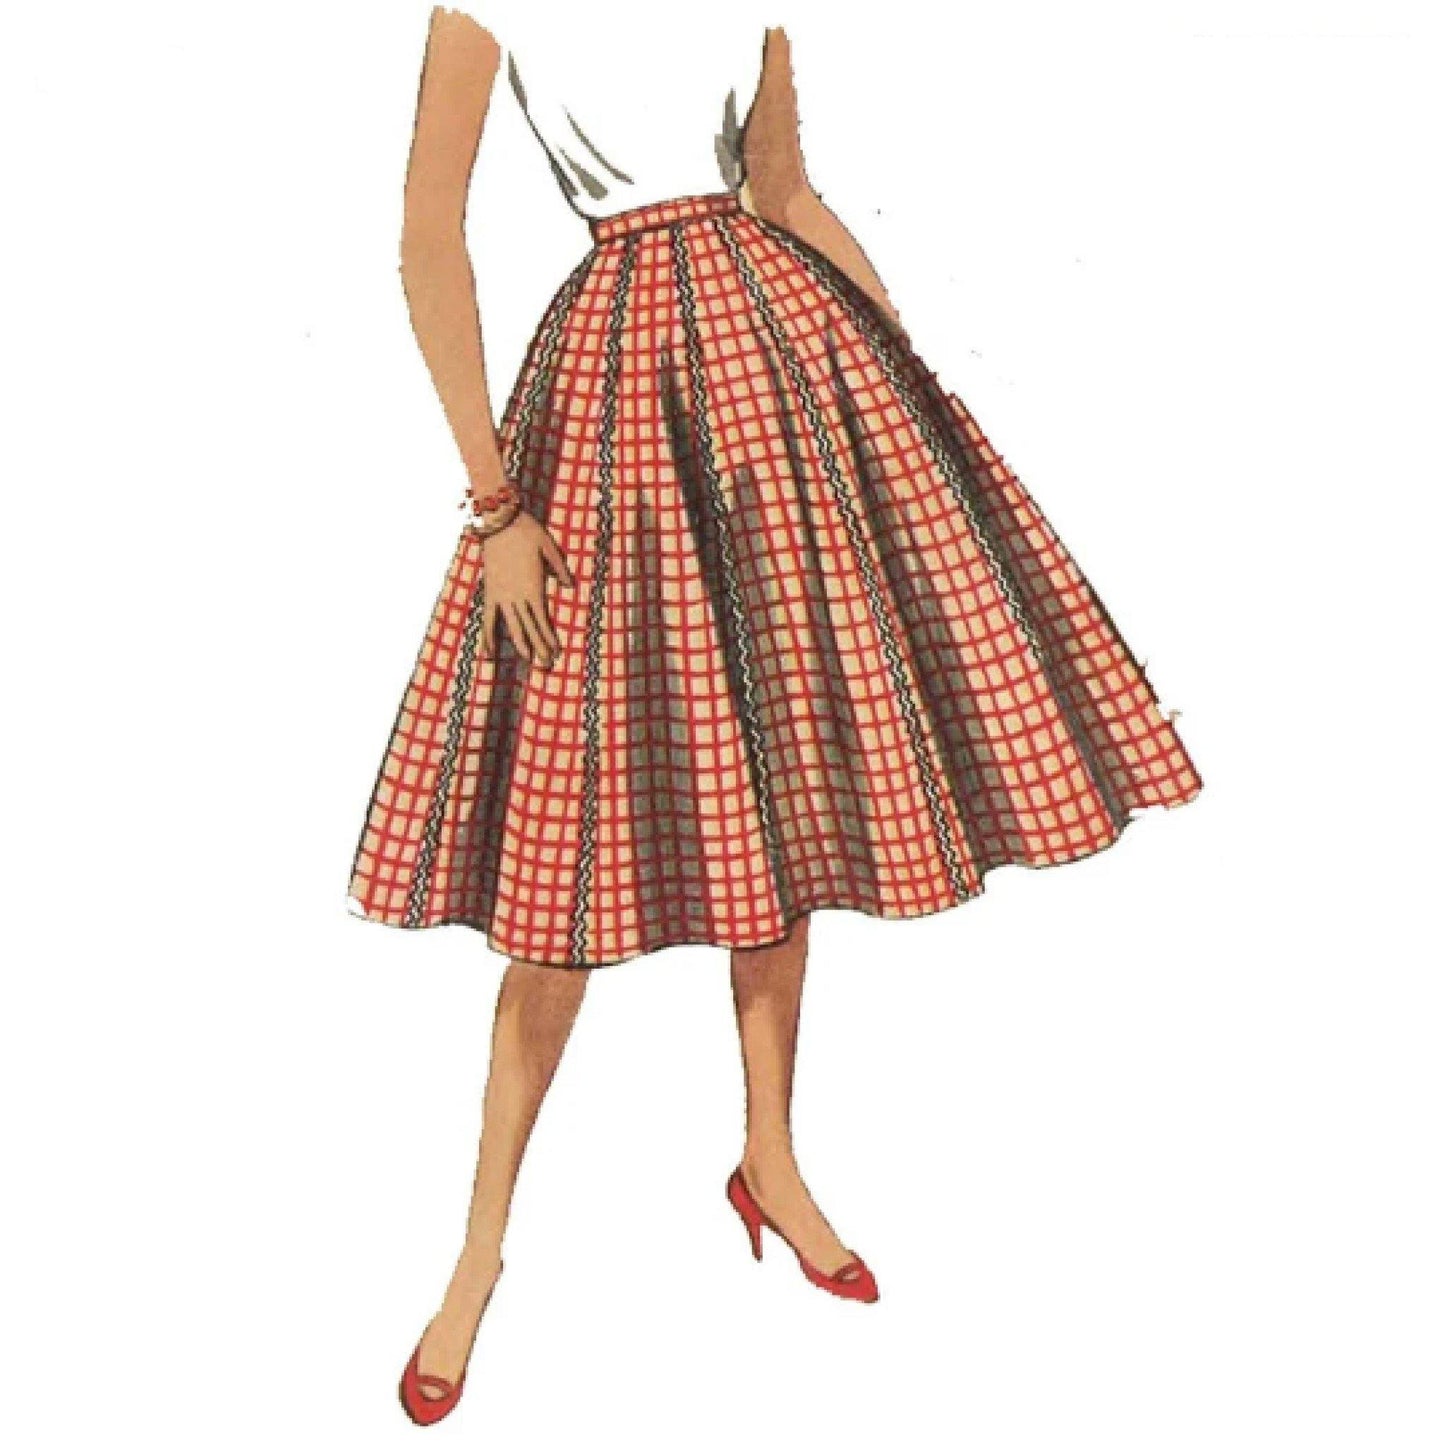 Model wearing skirt made using pattern Simplicity 1087 26 pattern.